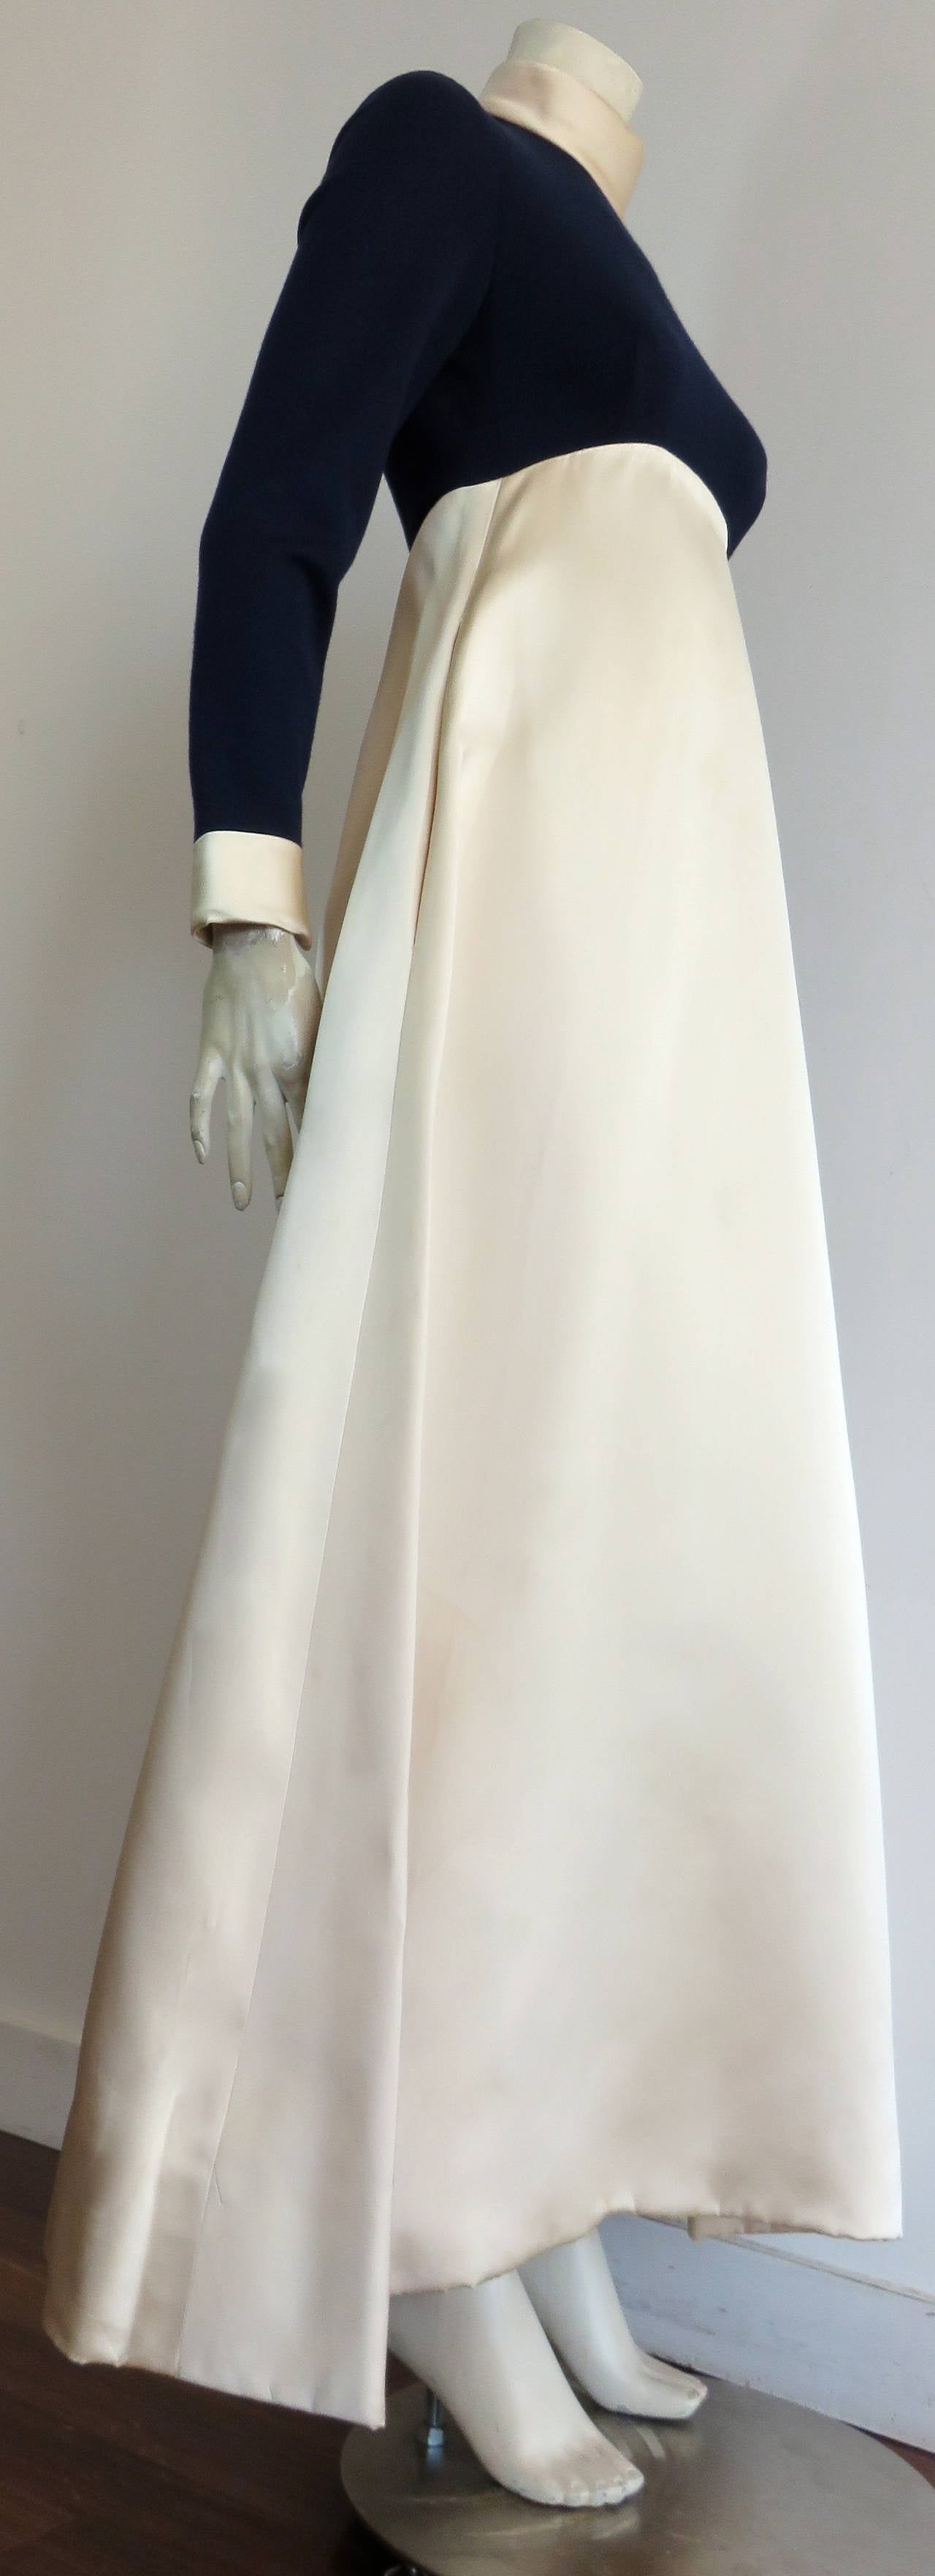 1960's GEOFFREY BEENE Satin & jersey evening gown dress For Sale 1